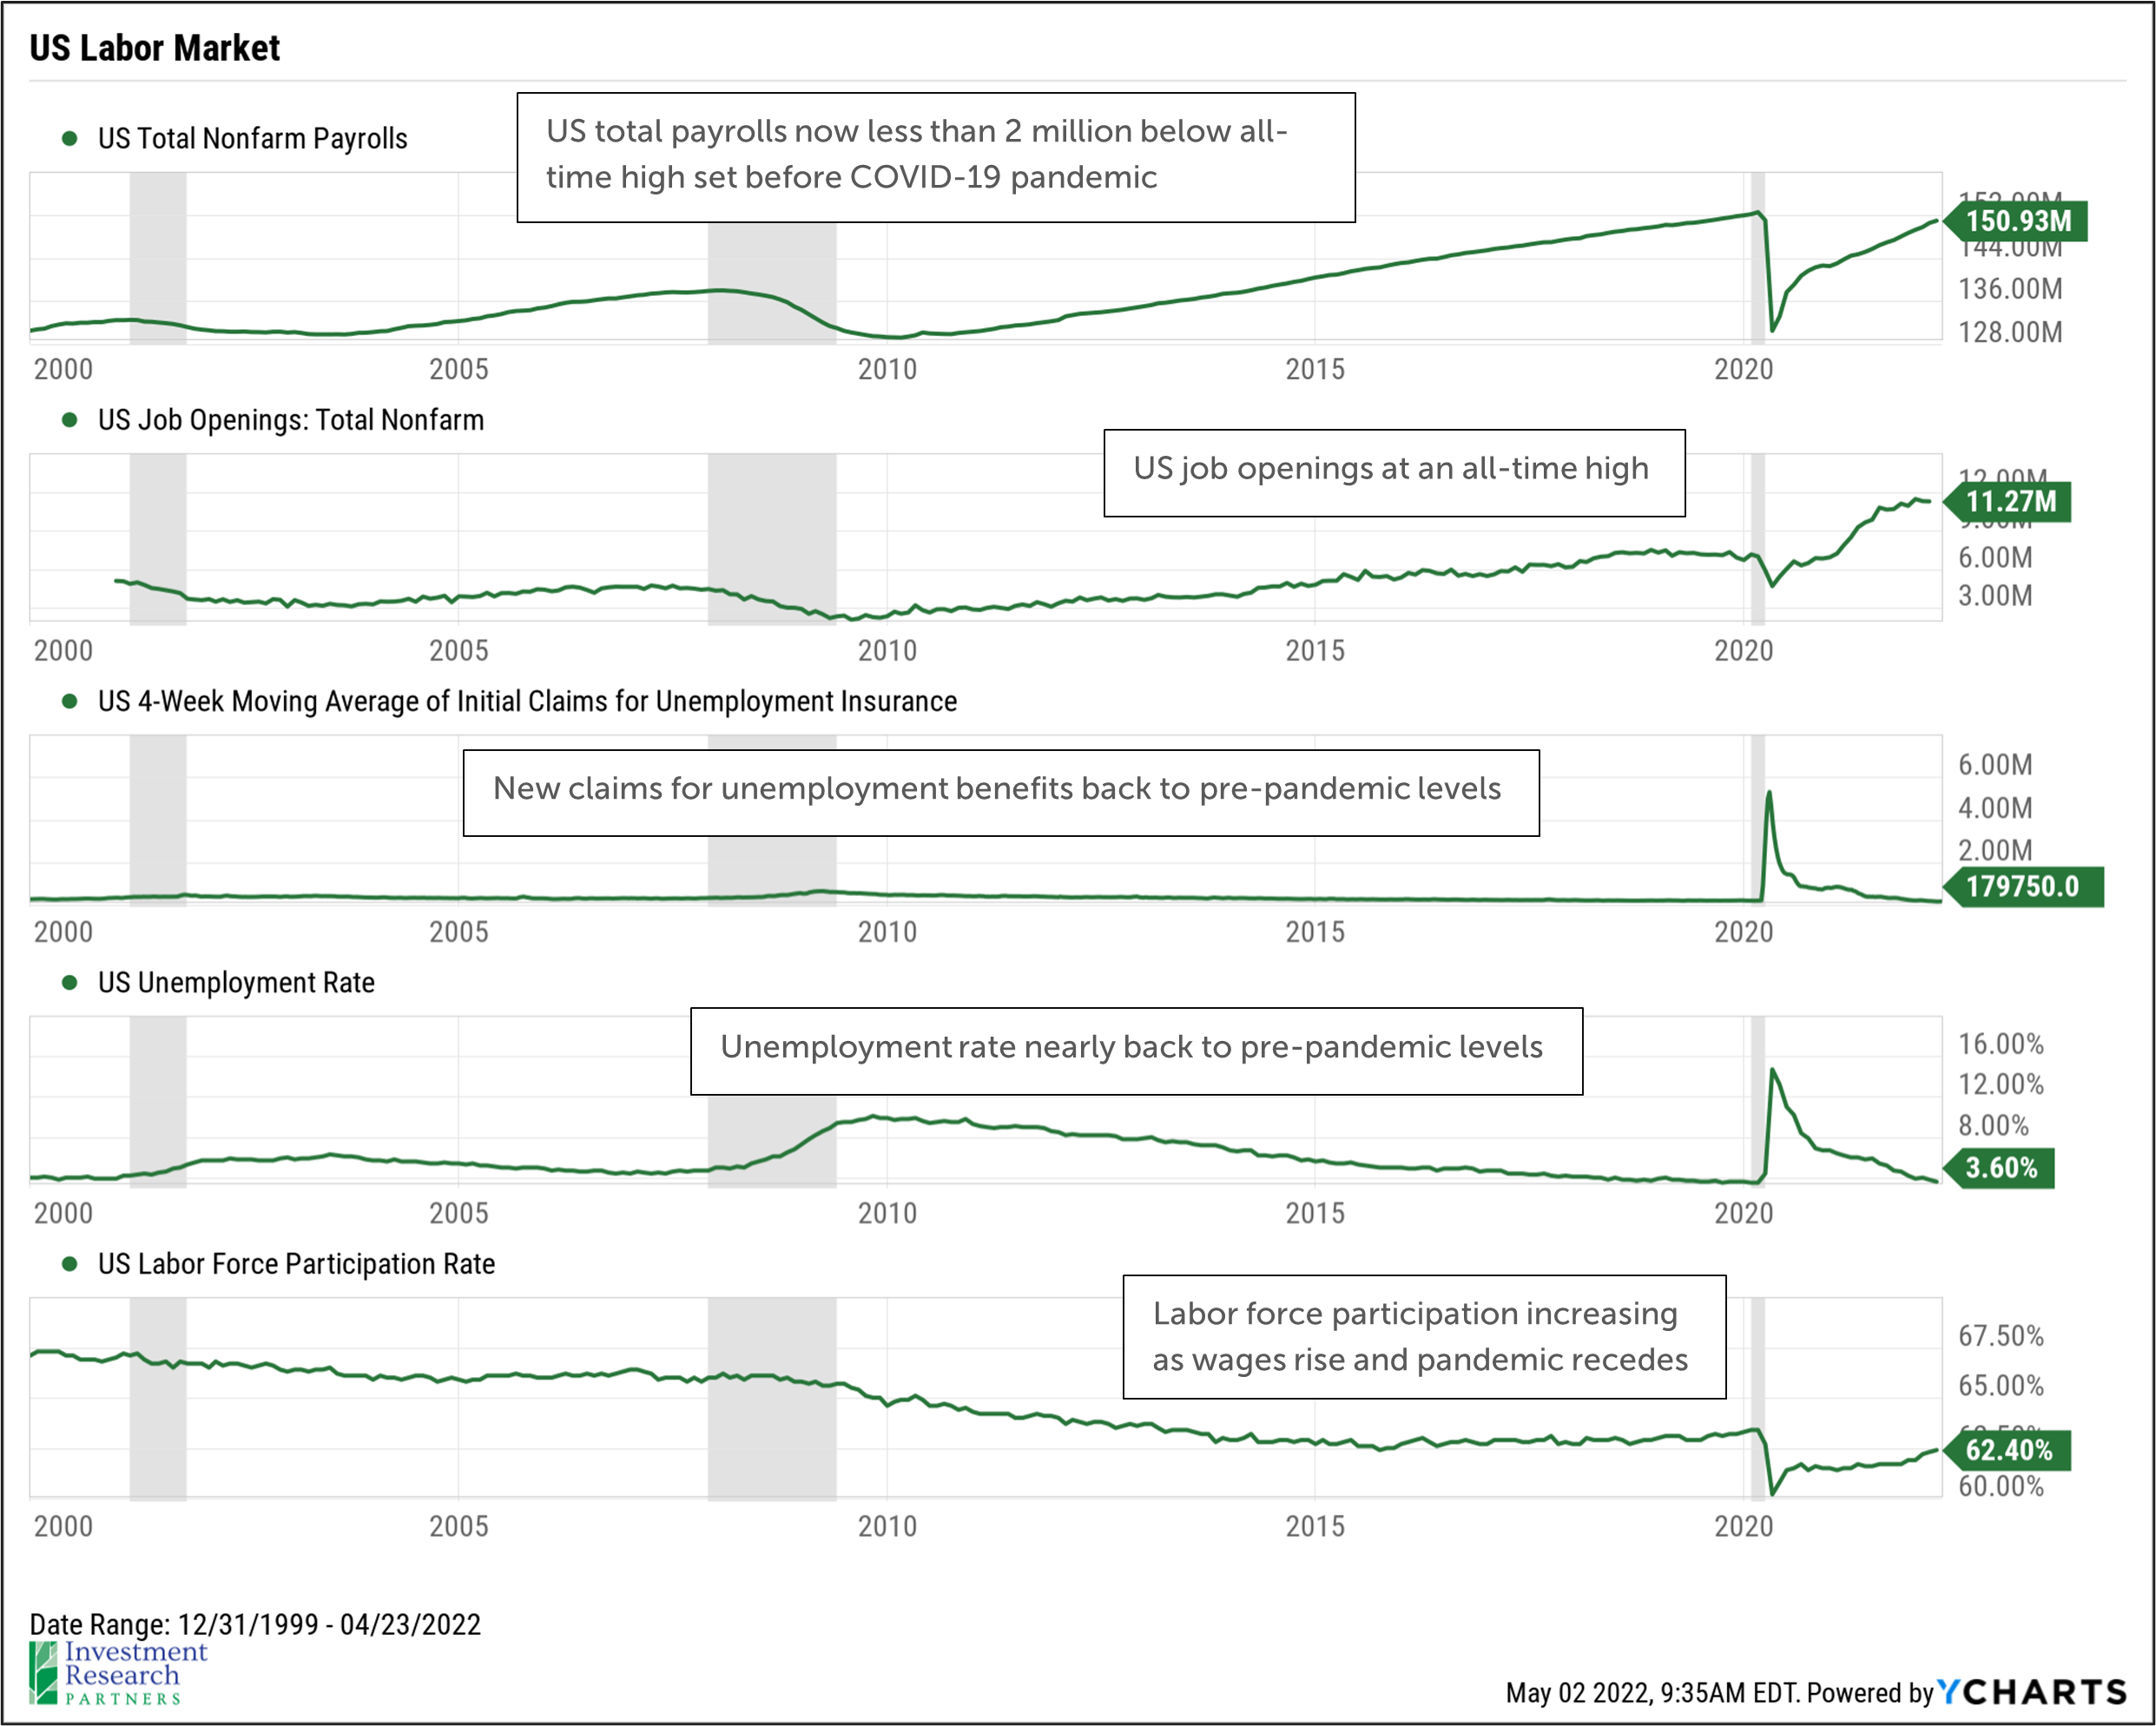 Line graphs depicting US Labor Market